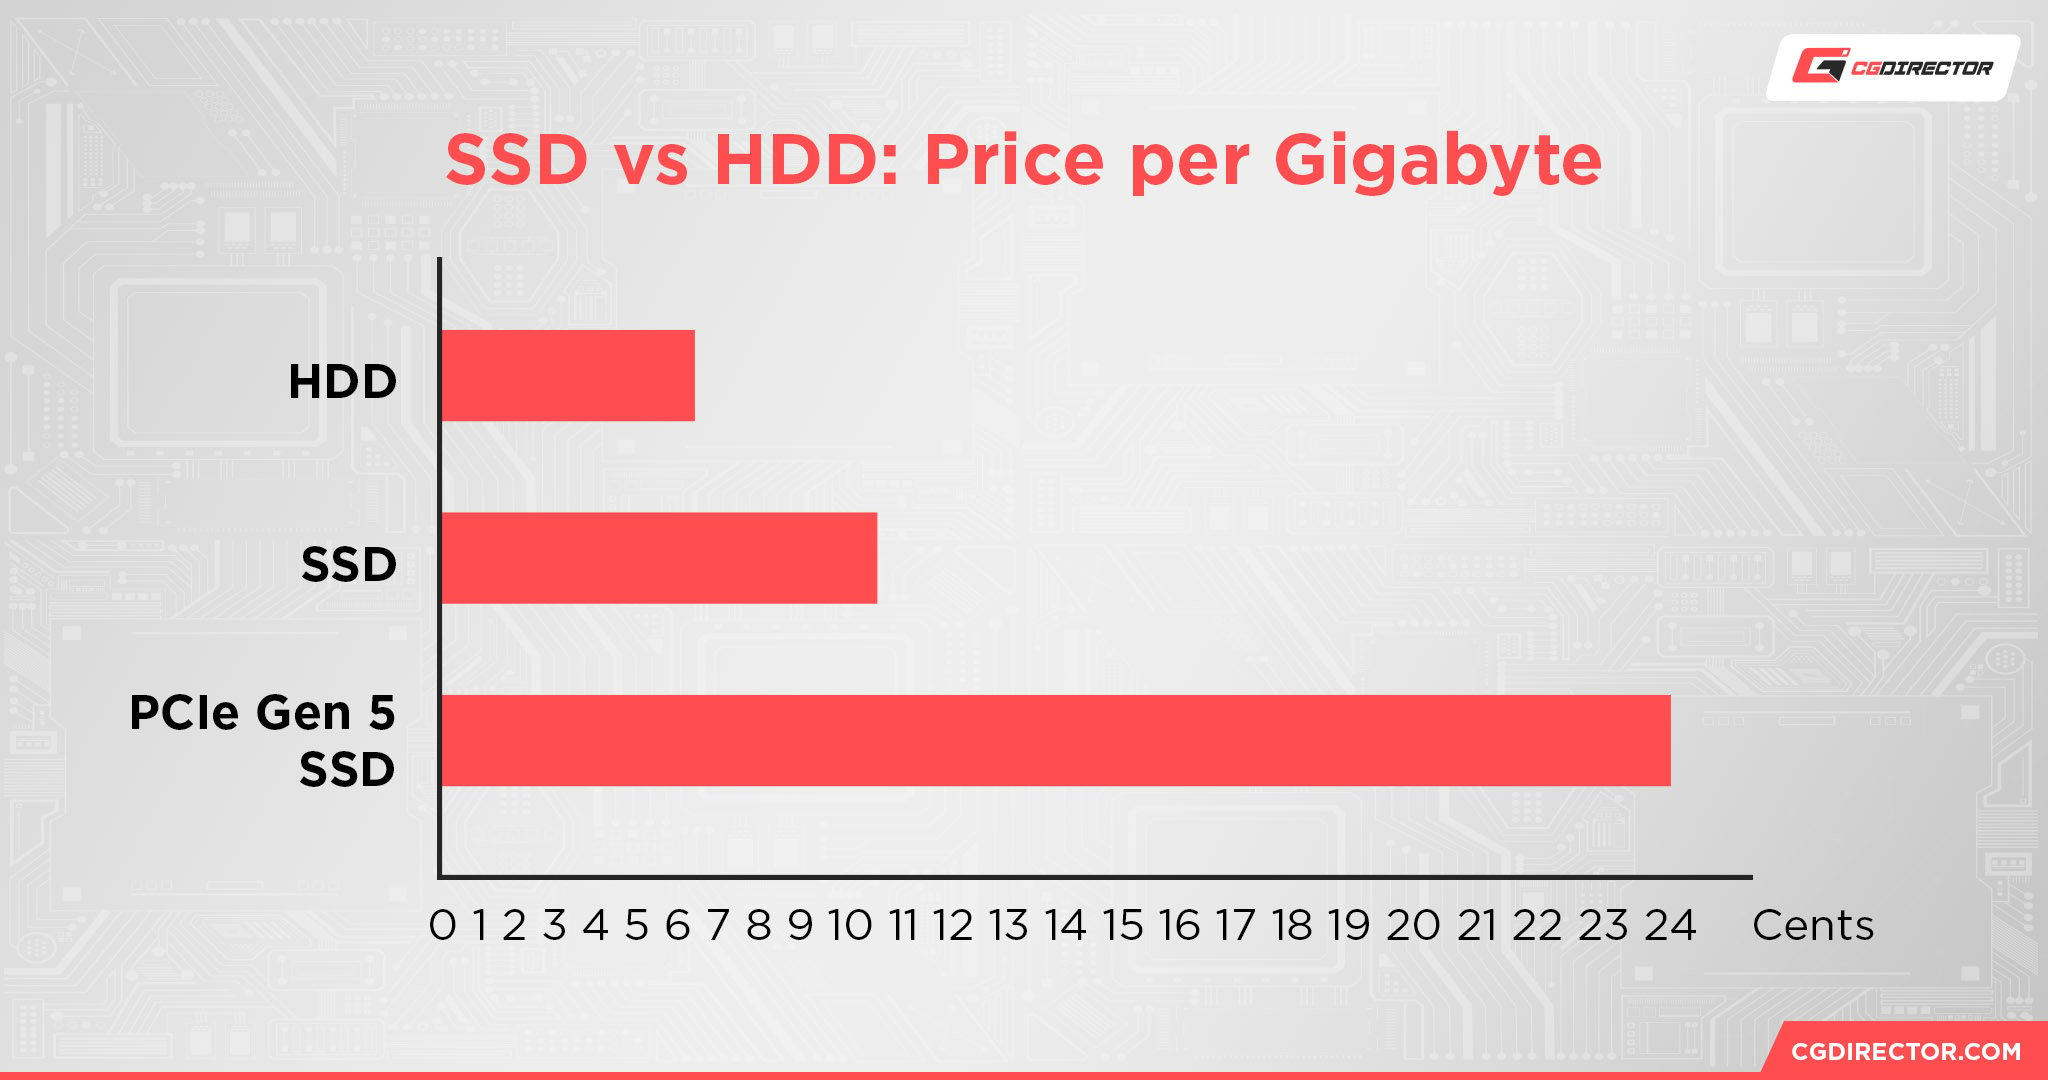 SSD vs HDD Price per Gigabyte